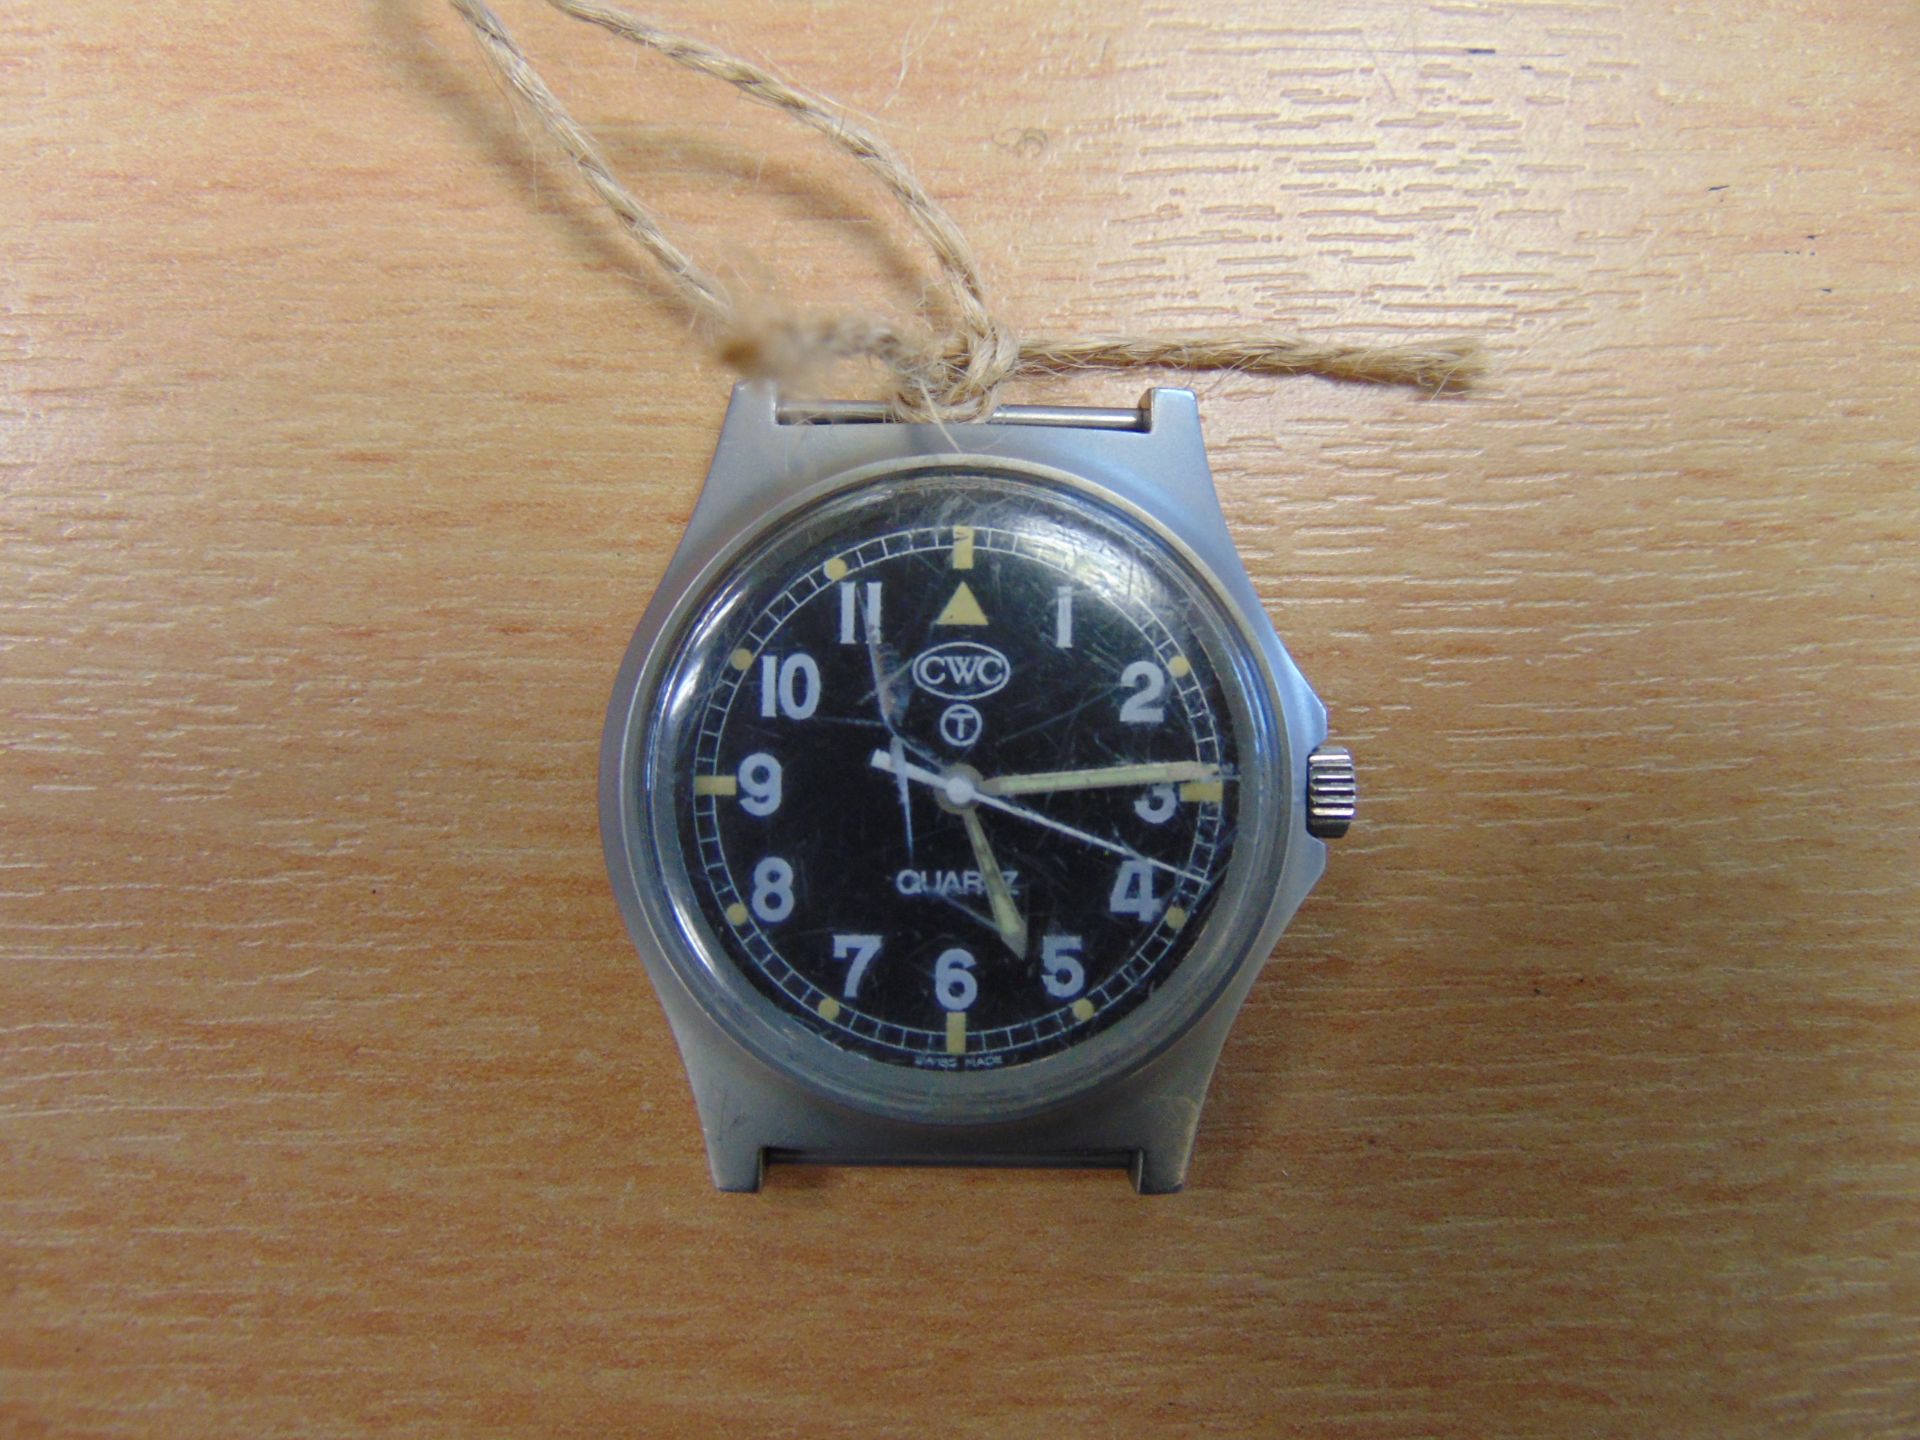 CWC (Cabot Watch Co Switzerland) British Army W10 Service Watch, SNo 1066, Date 1998